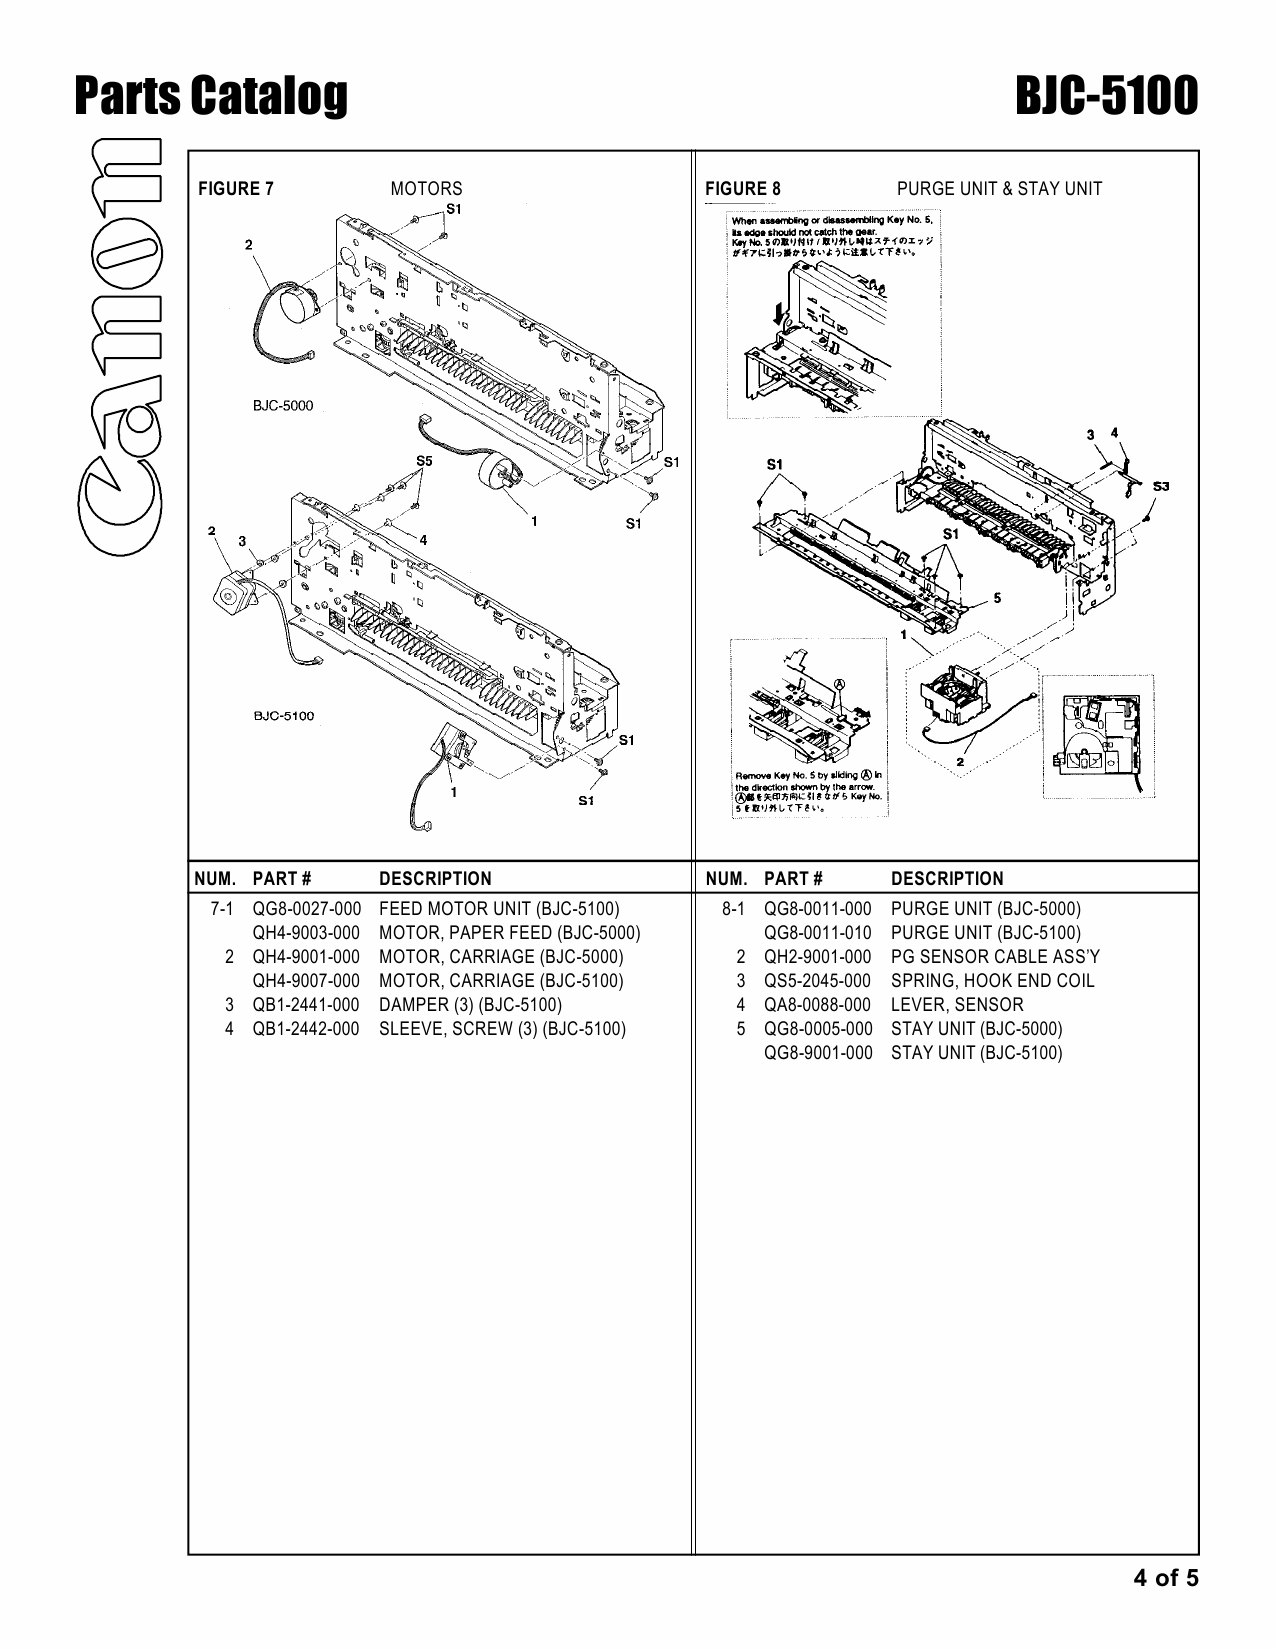 Canon BubbleJet BJC-5100 Parts Catalog Manual-5